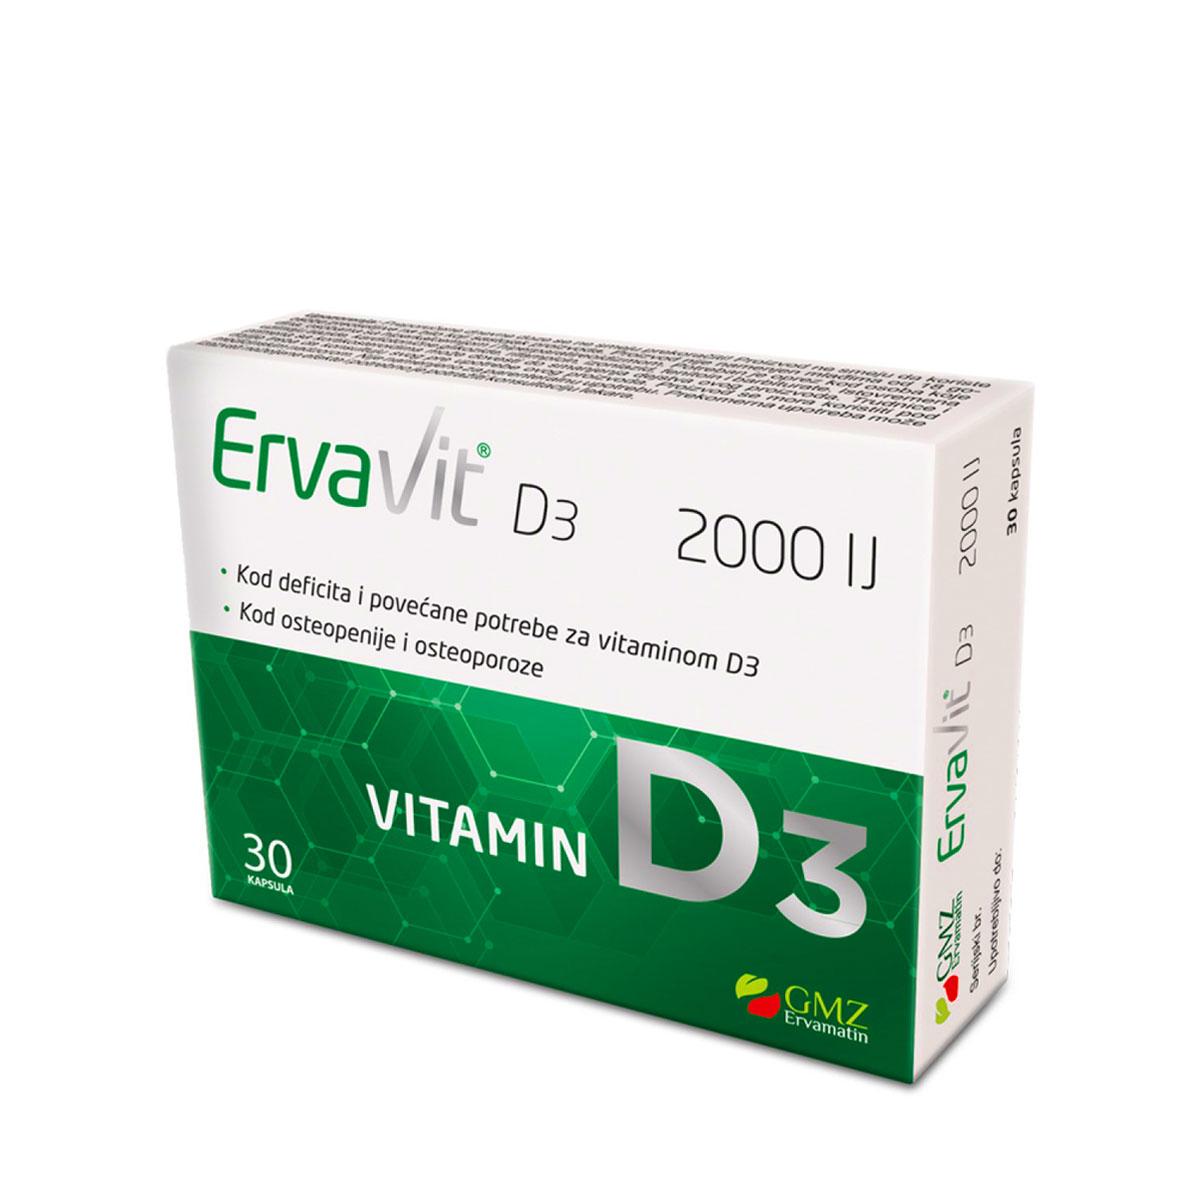 Selected image for GMZ ERVAMATIN ErvaVit Vitamin D3 2000 IU 30/1 127528